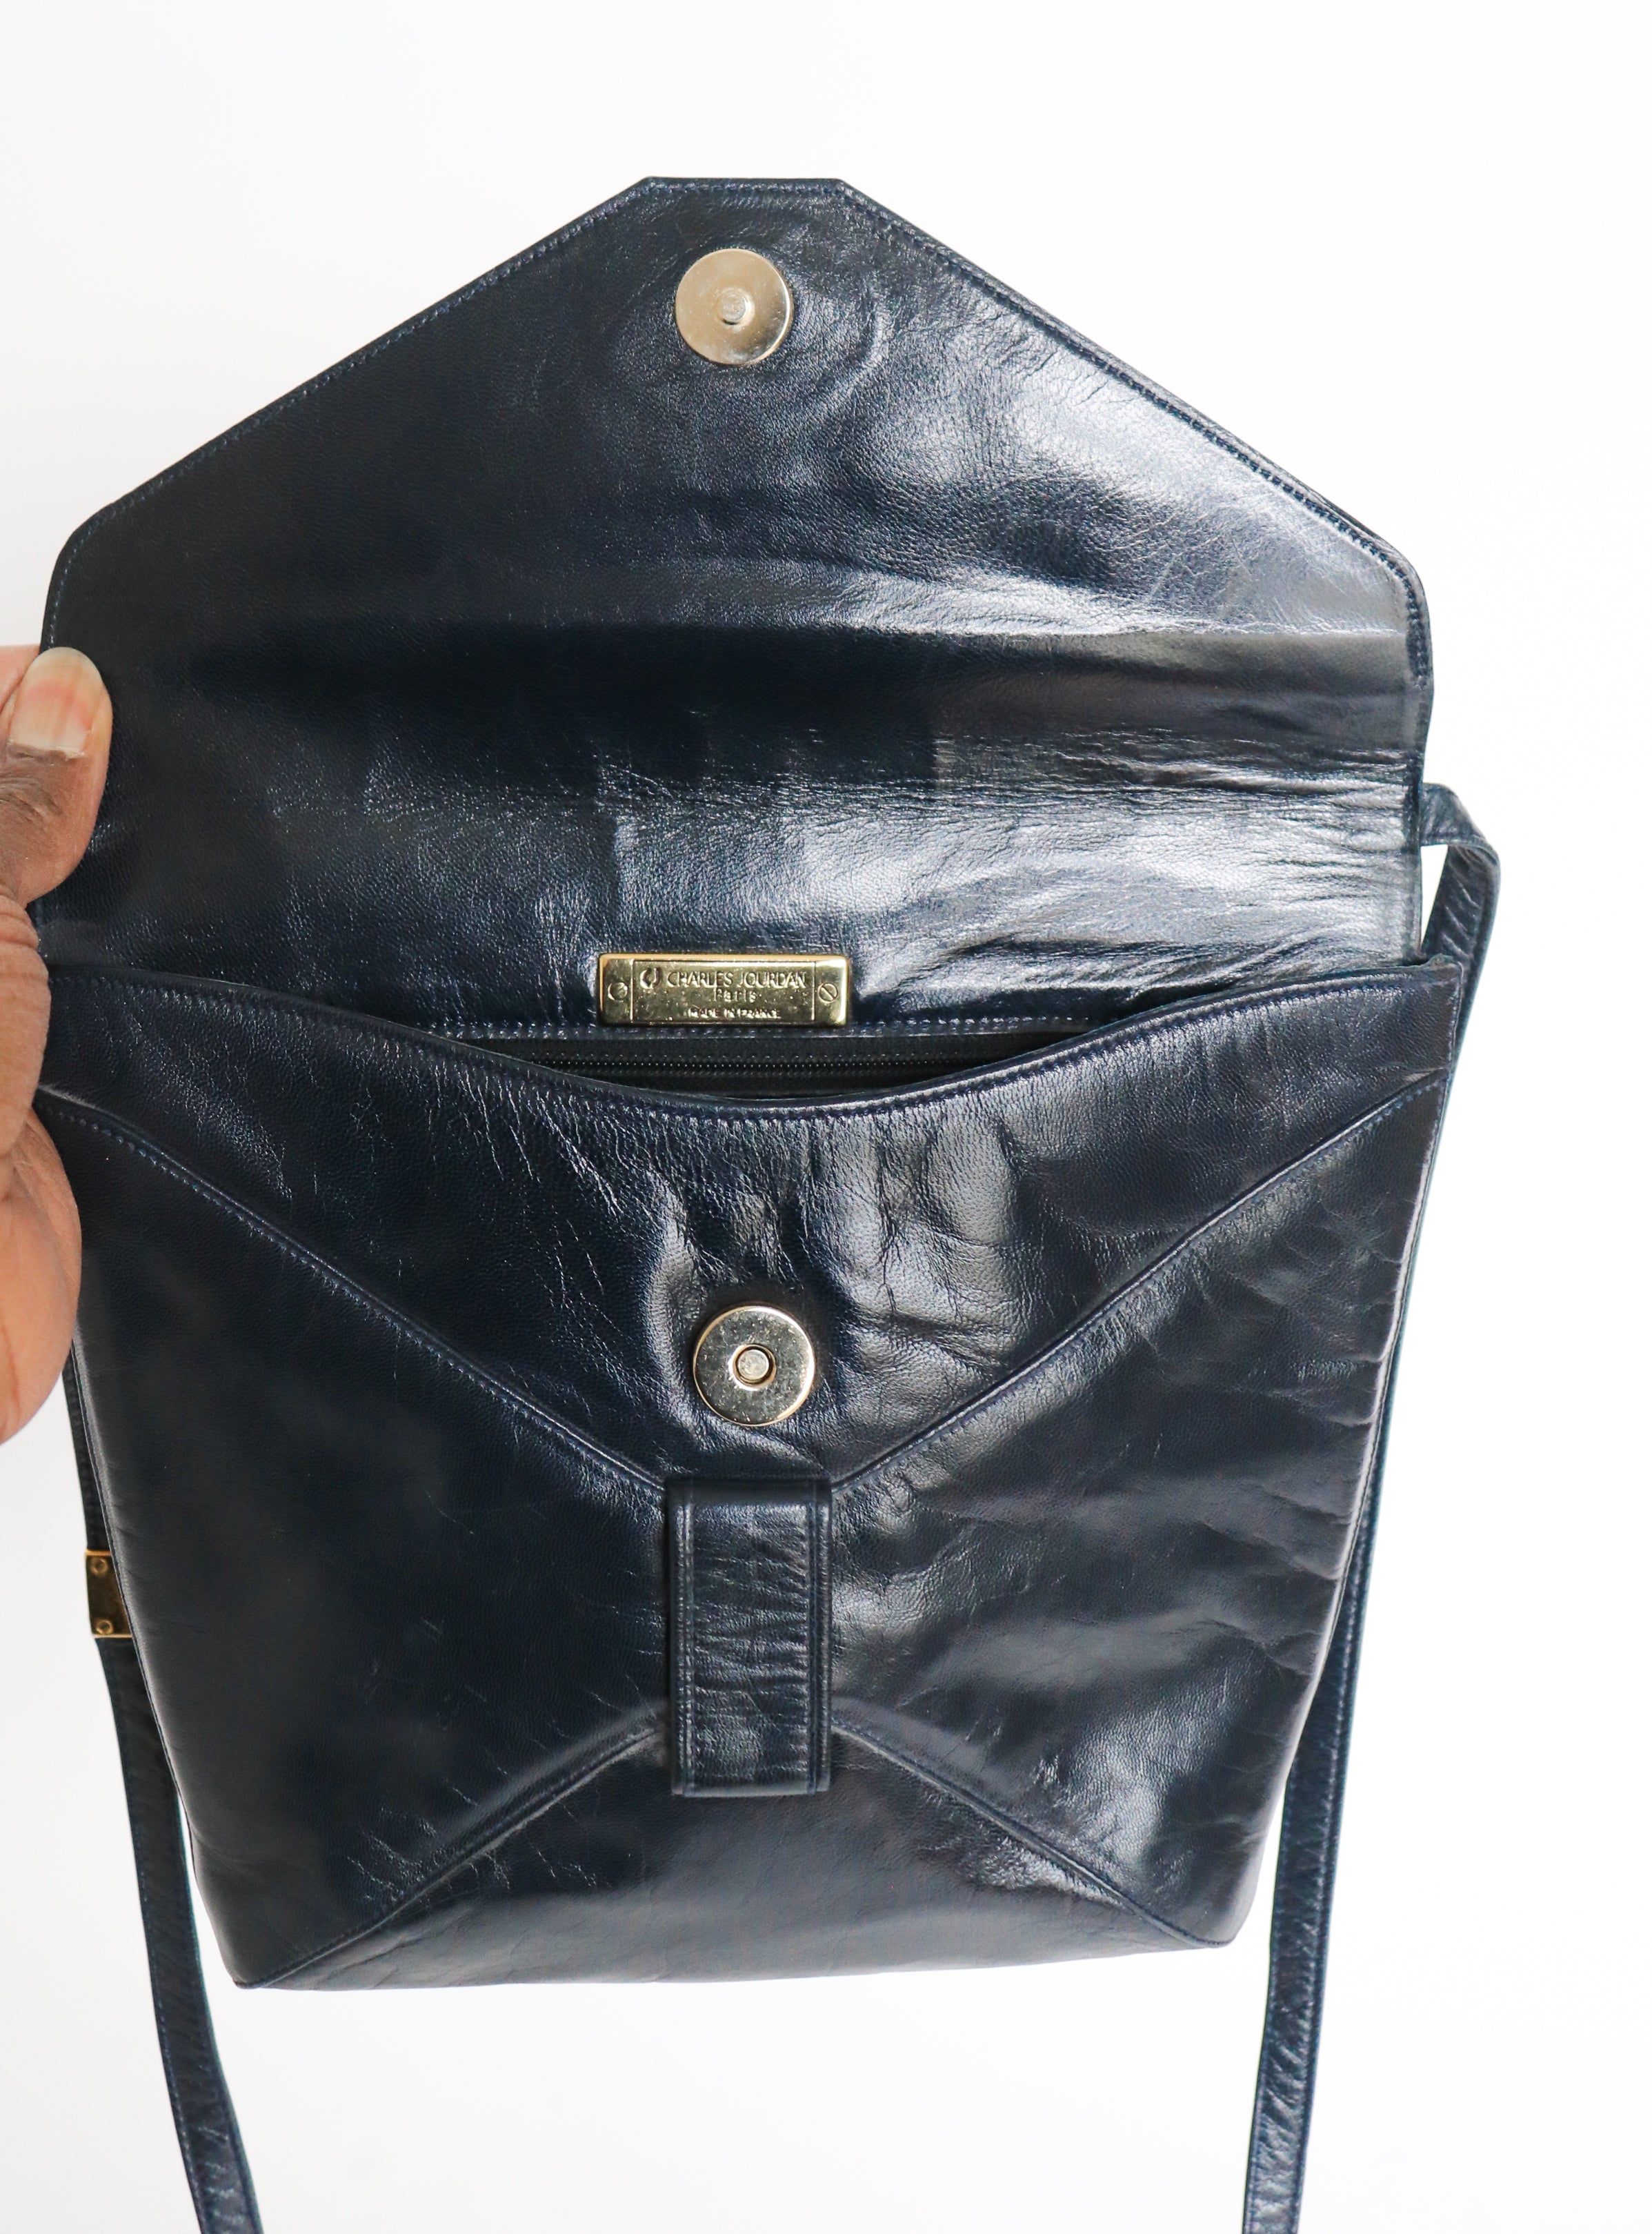 Charles Jourdan Vintage Crossbody Bag - Dark Blue Leather - 1980s - Small